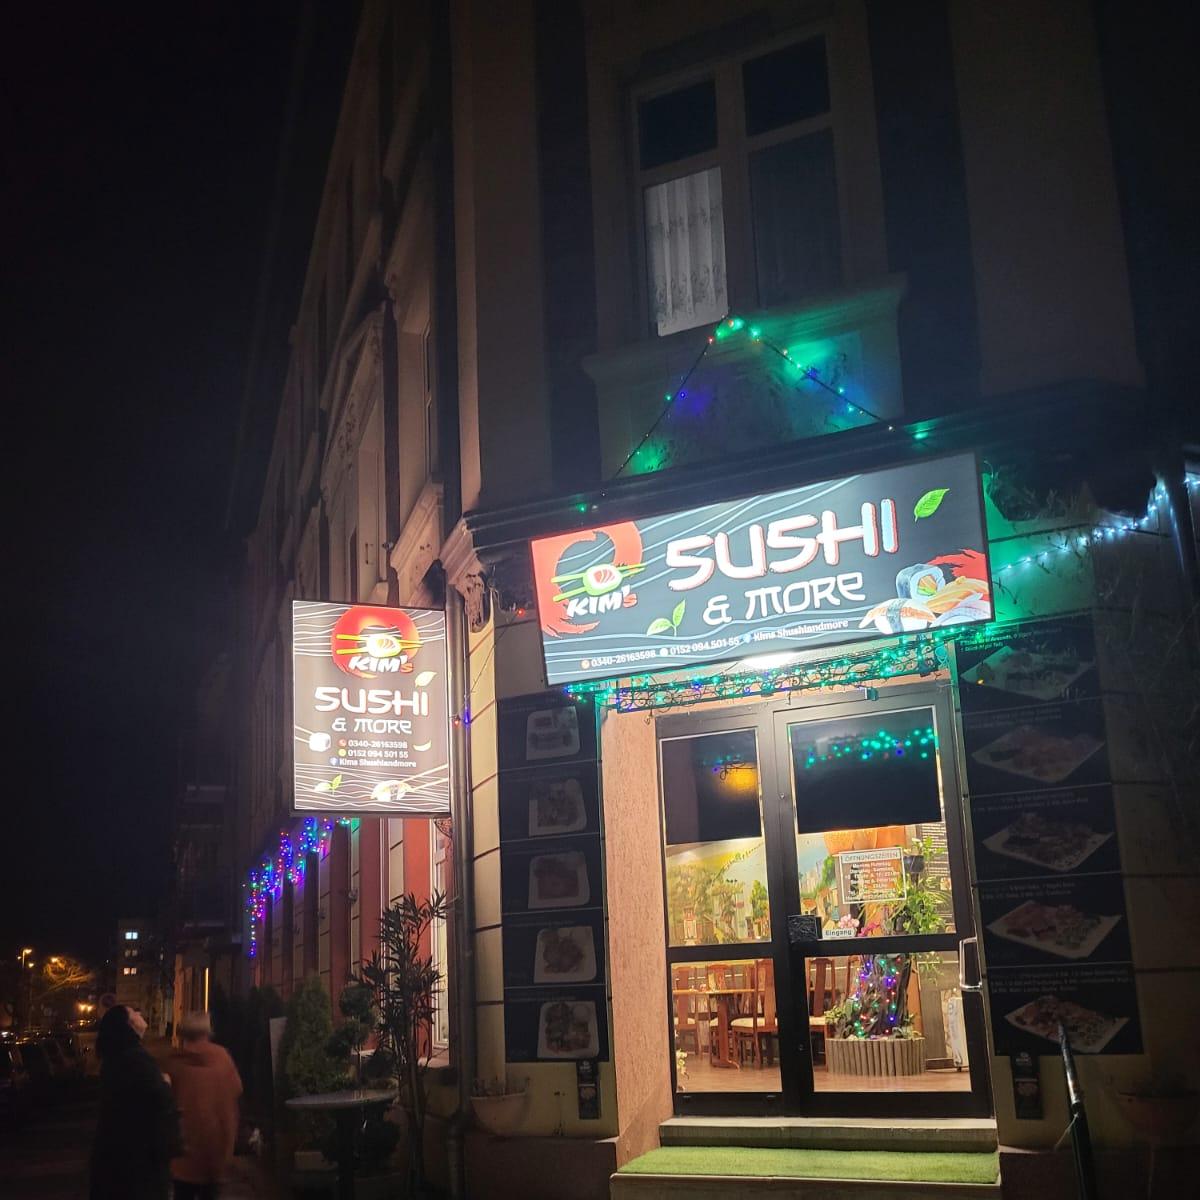 Restaurant "Kim´s Sushi and More" in Dessau-Roßlau